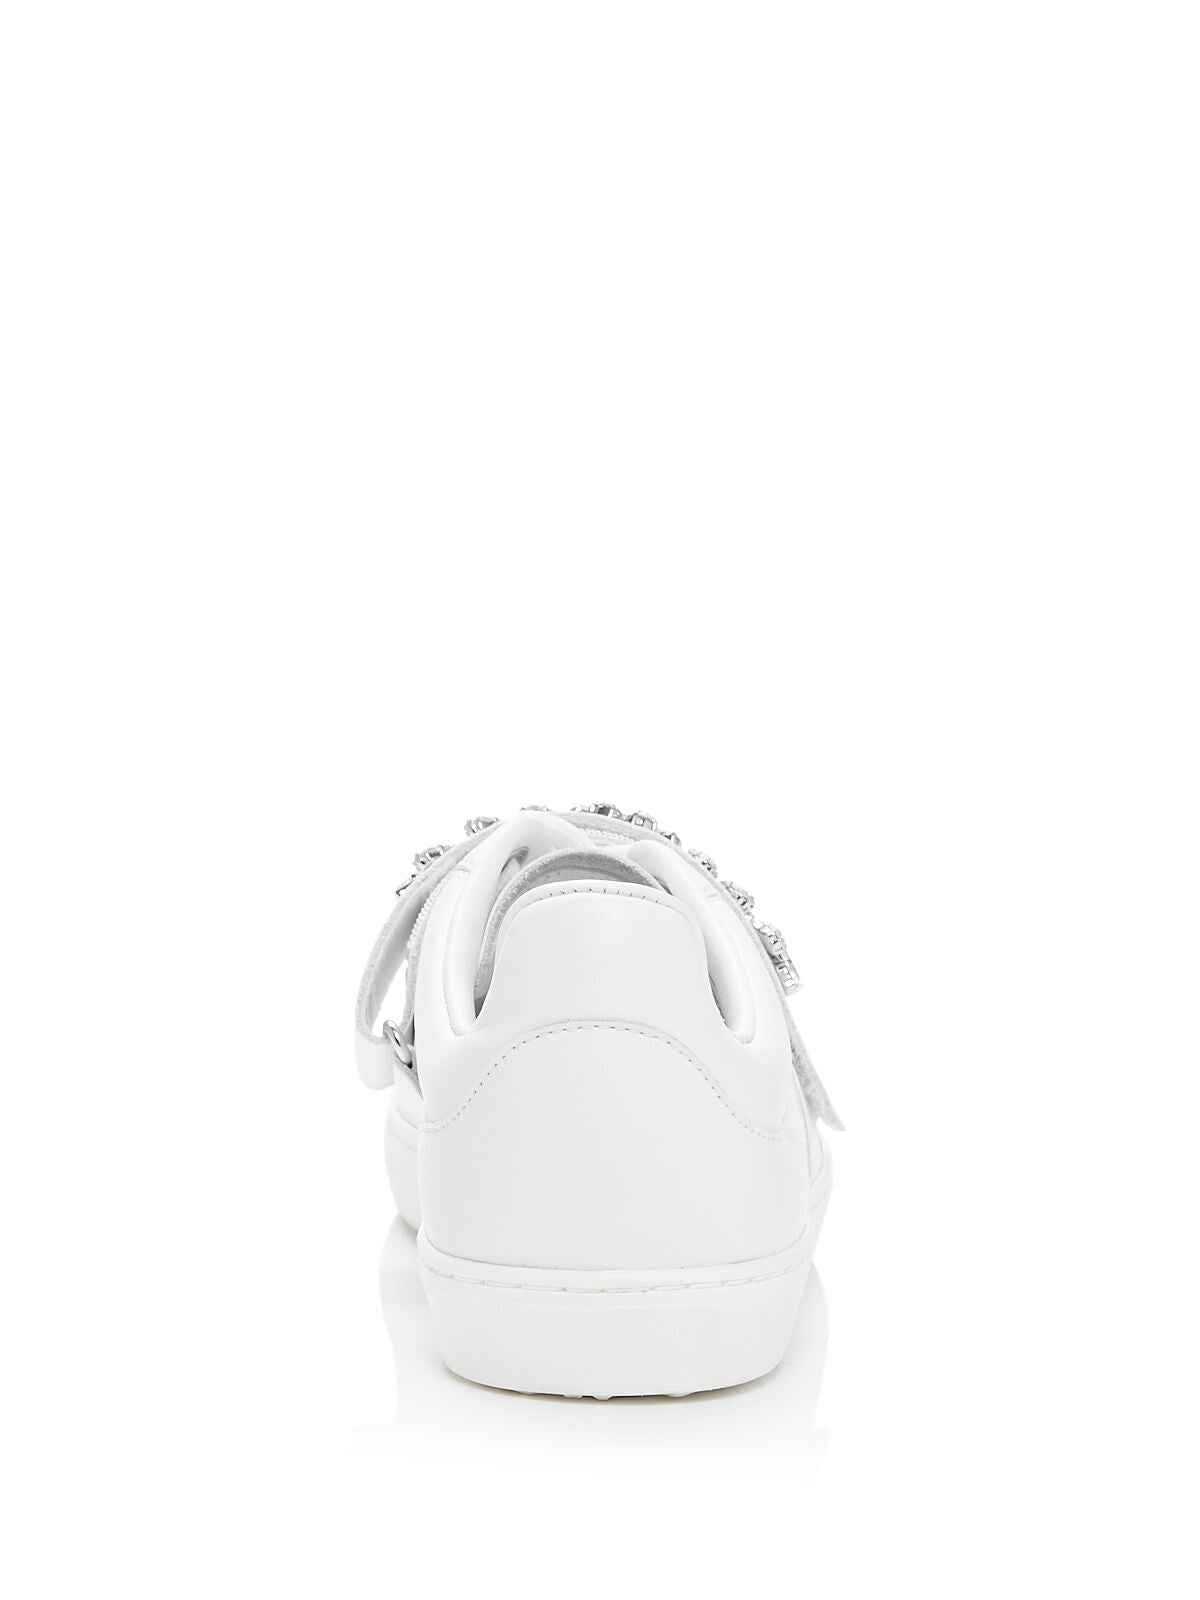 STUART WEITZMAN Womens White Comfort Embellished Adjustable Strap Promise Round Toe Platform Lace-Up Leather Athletic Sneakers Shoes 9.5 B